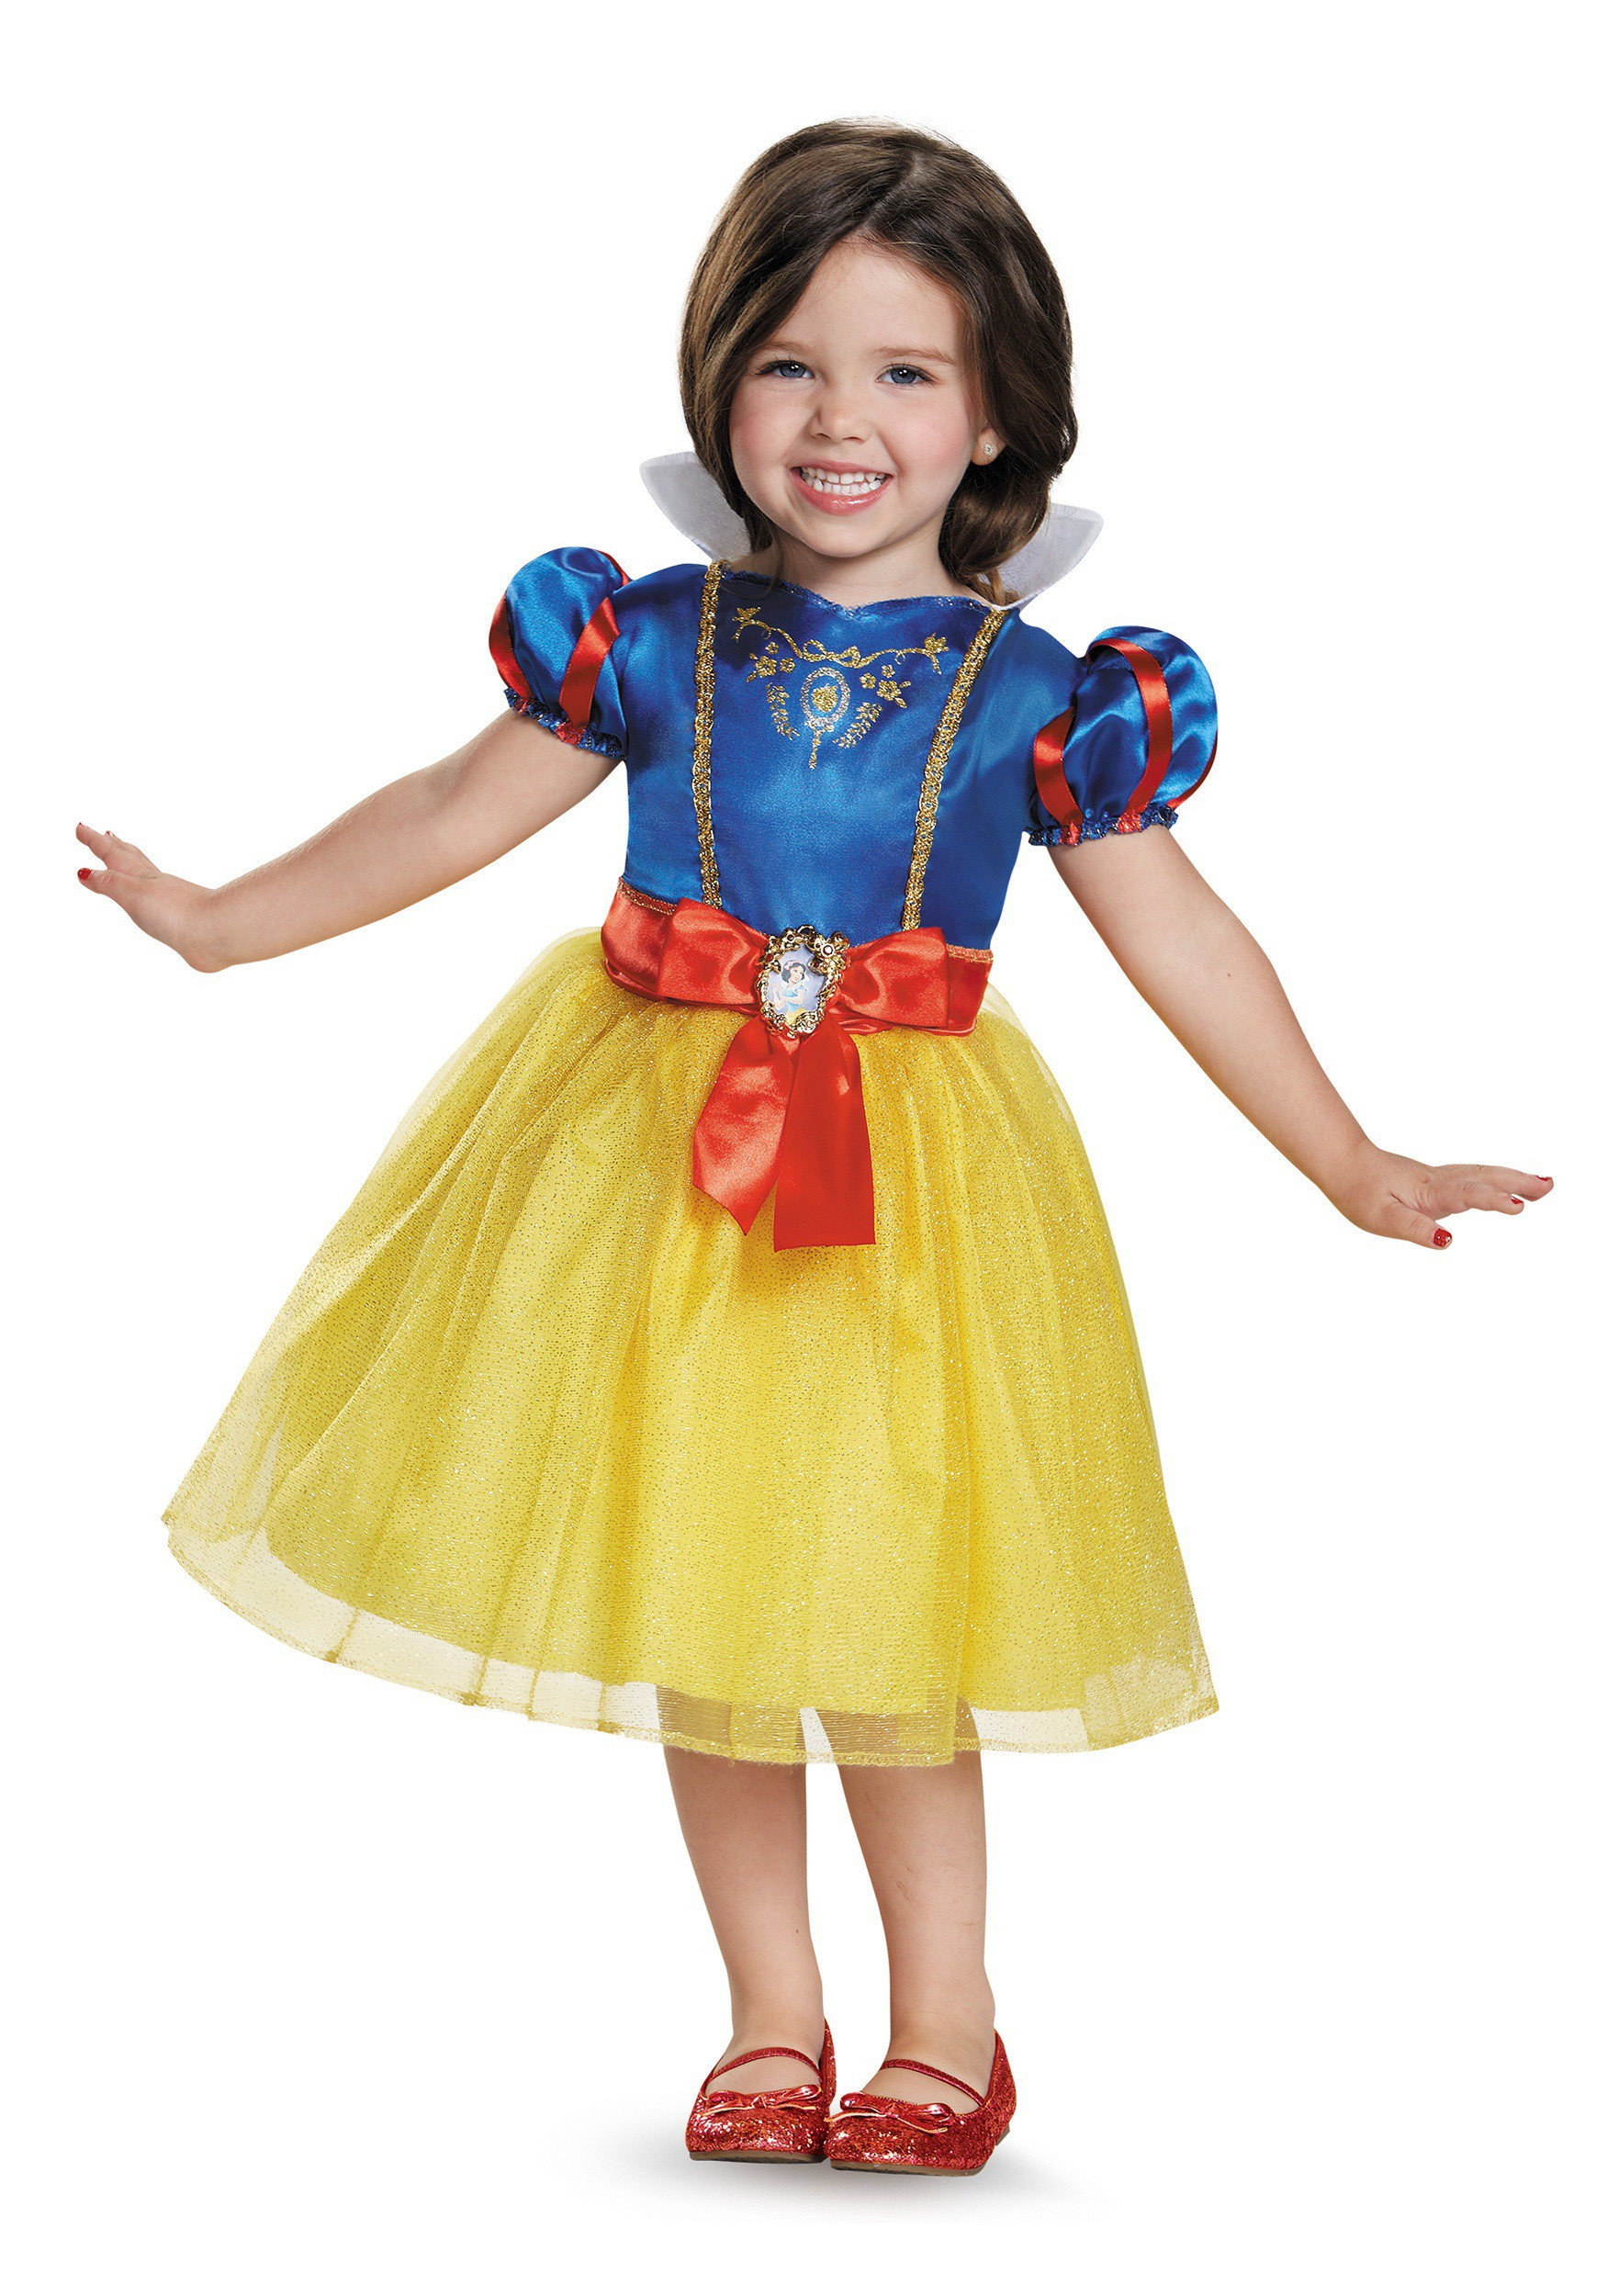 DIY Snow White Costume Toddler
 Snow White Classic Toddler Costume